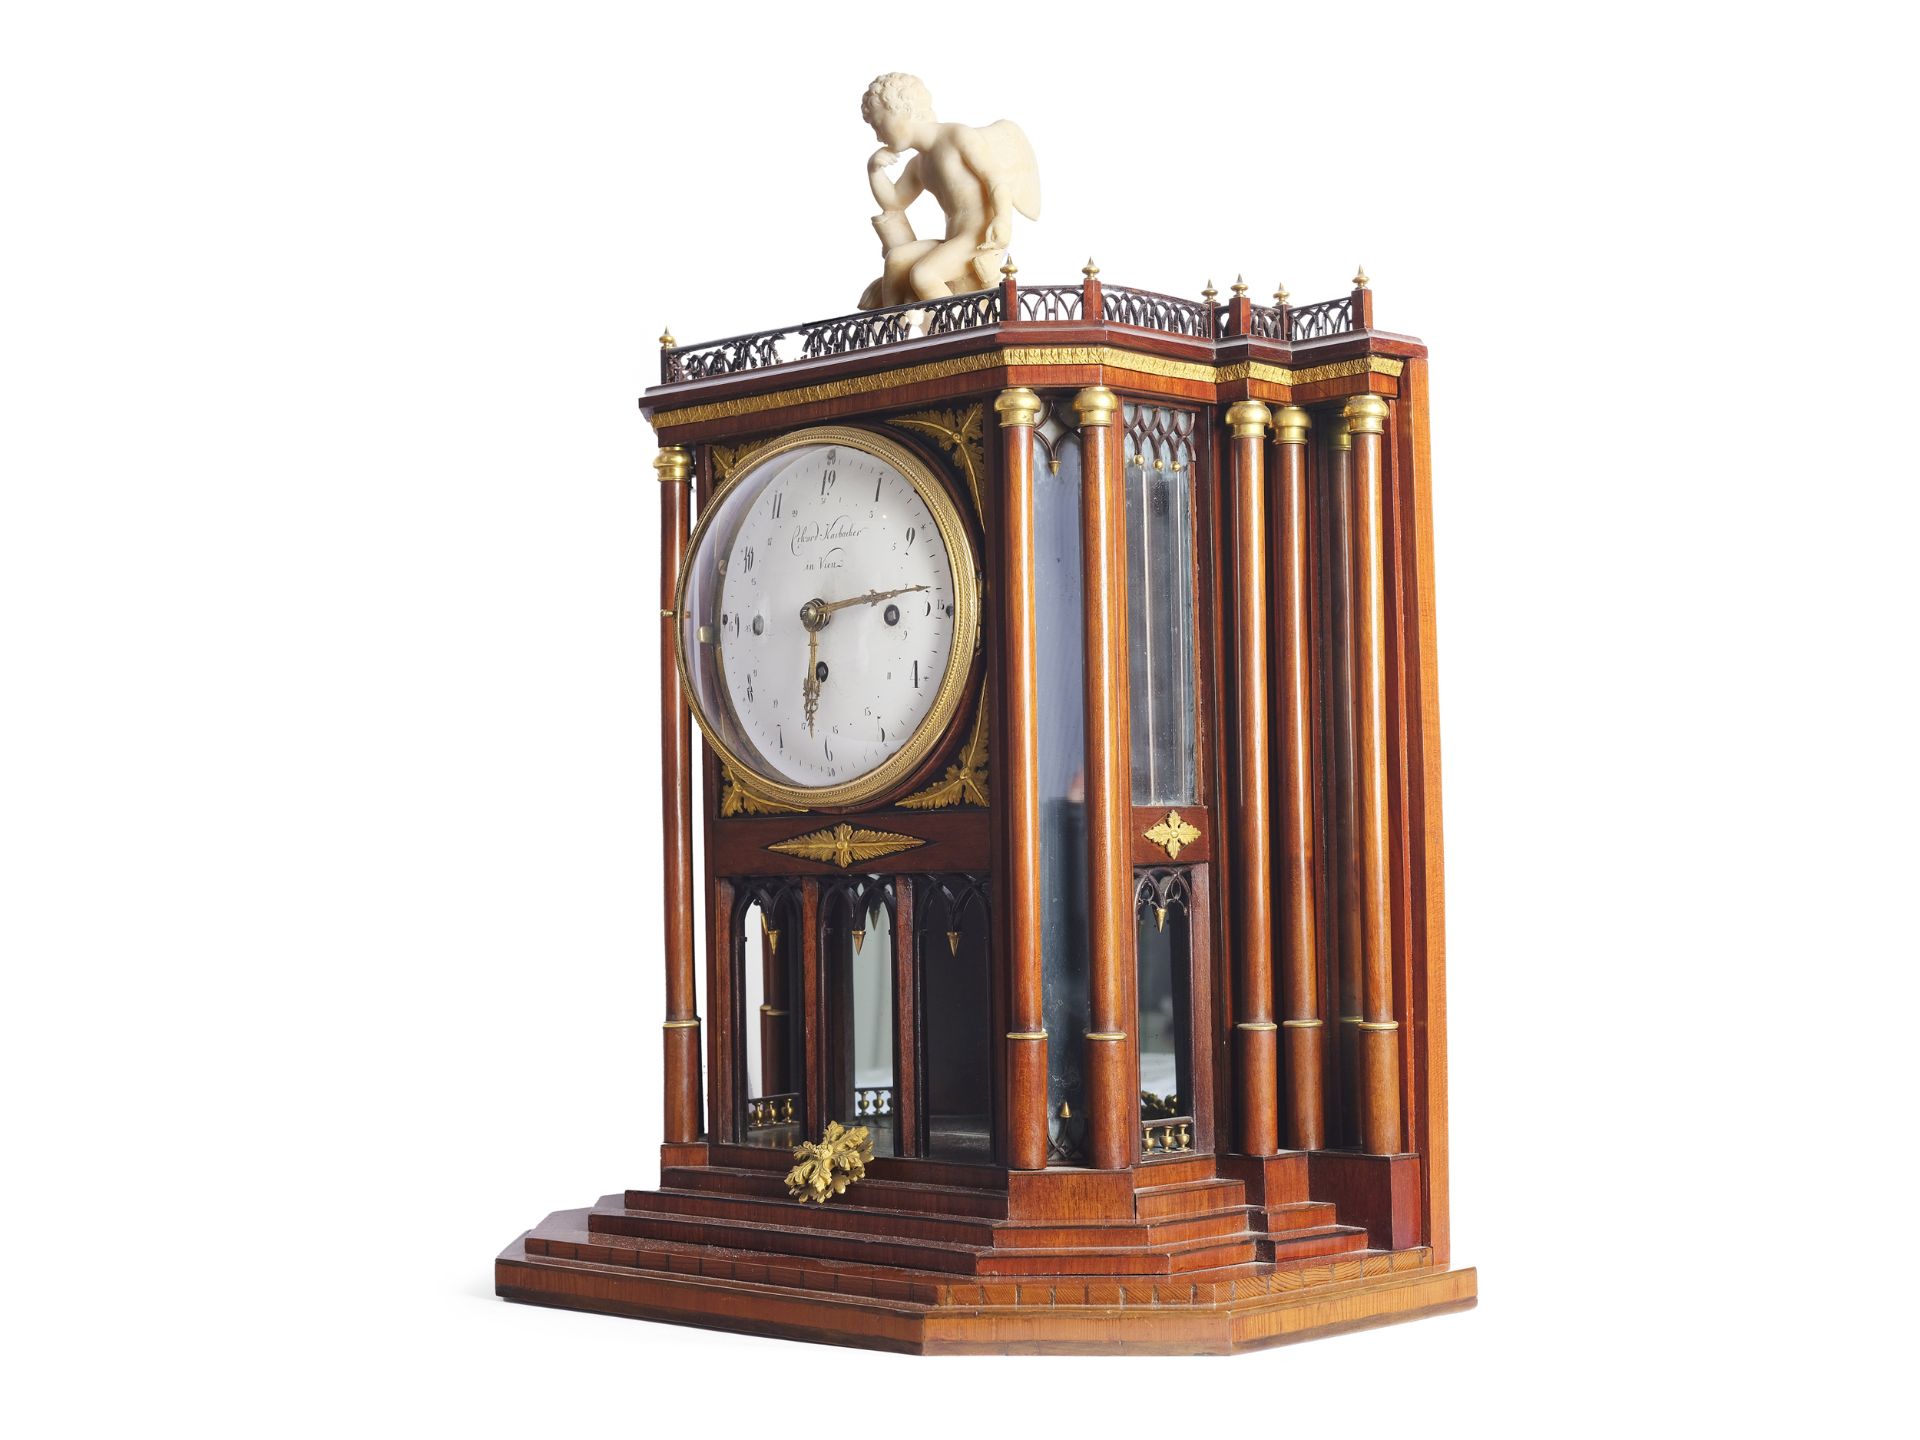 Elegant commode clock, Erhard Karbacher Vienna, around 1800 - Image 3 of 6